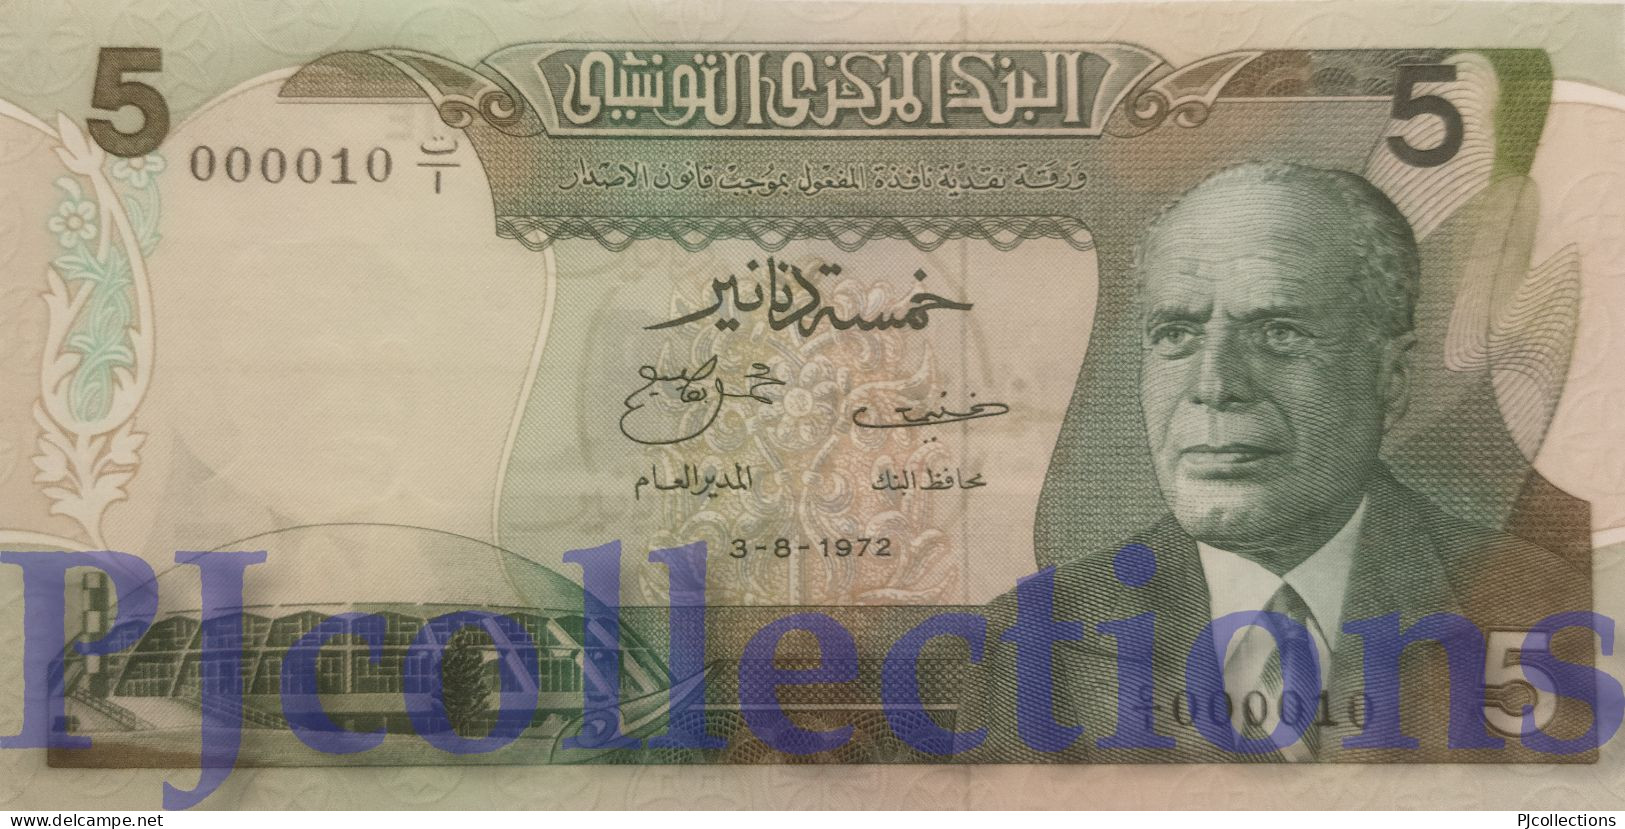 TUNISIA 5 DINARS 1972 PICK 68a AUNC VERY LOW & GOOD SERIAL NUMBER "C/1 000010" - Tunisia